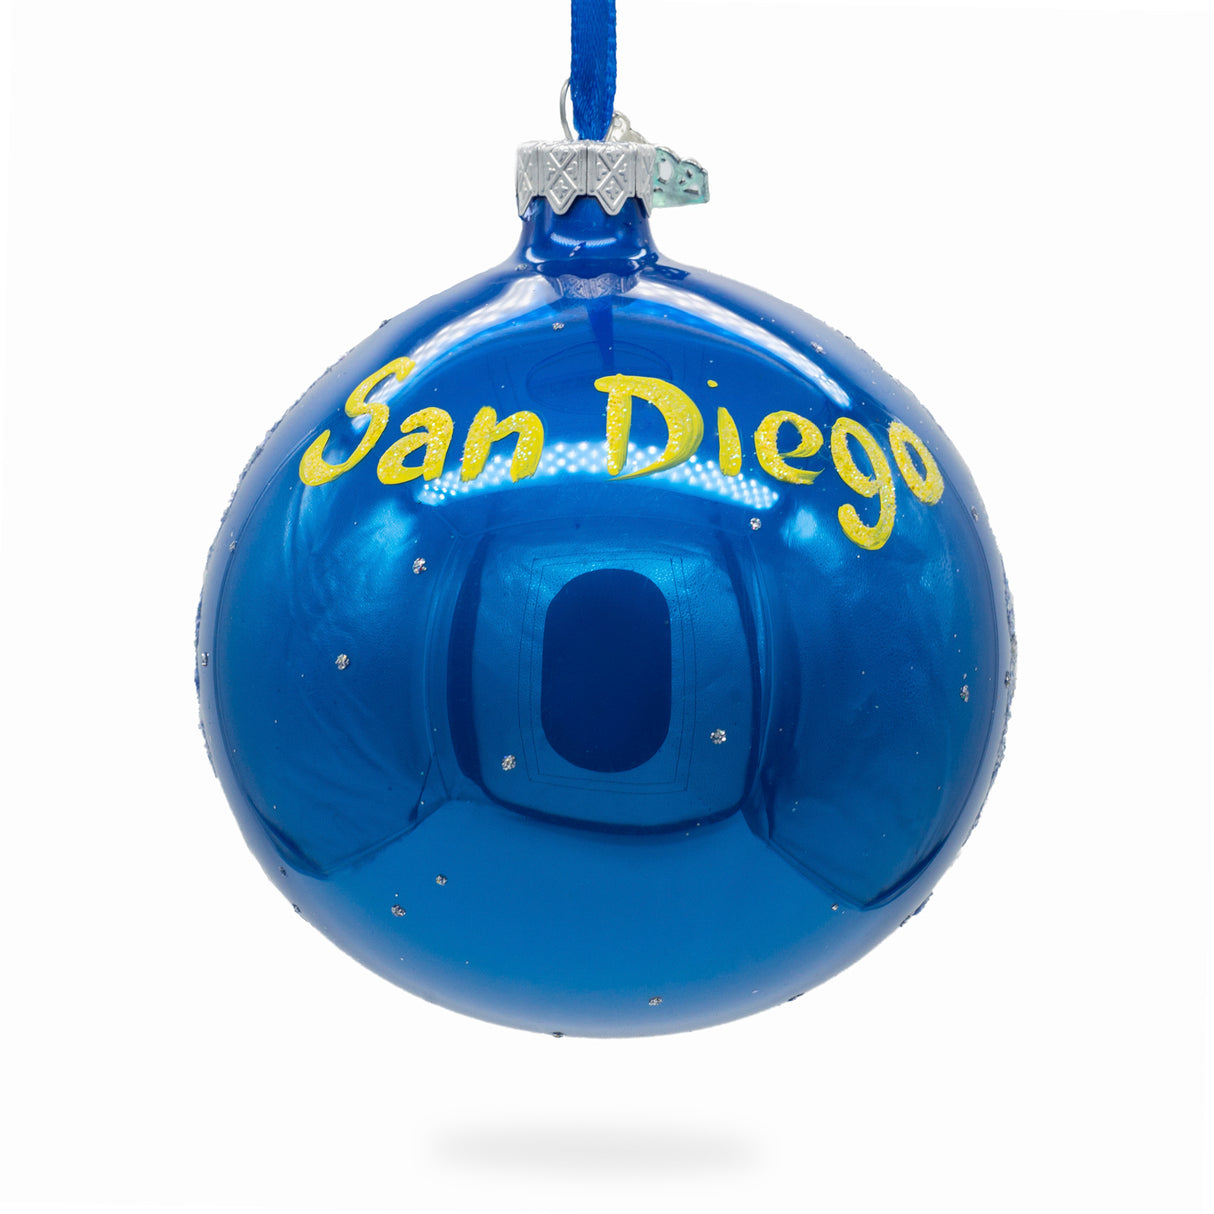 Buy Christmas Ornaments > Travel > North America > USA > California > San Diego by BestPysanky Online Gift Ship